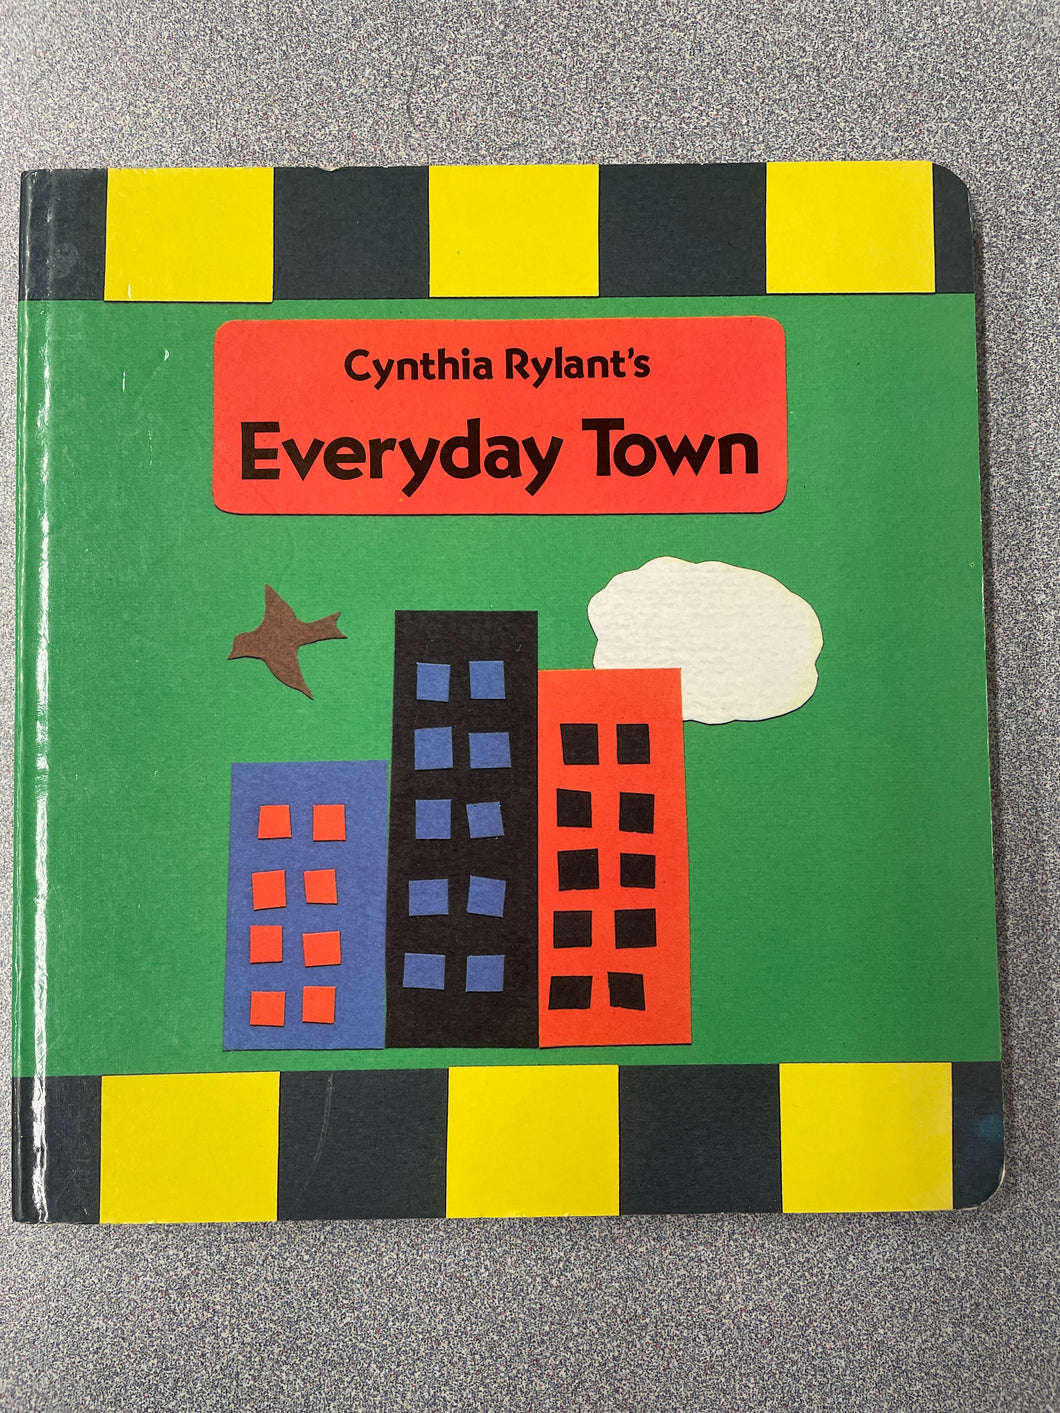 Rylant, Cynthia, Cynthia Rylant's Everyday Town [1993] 4/24